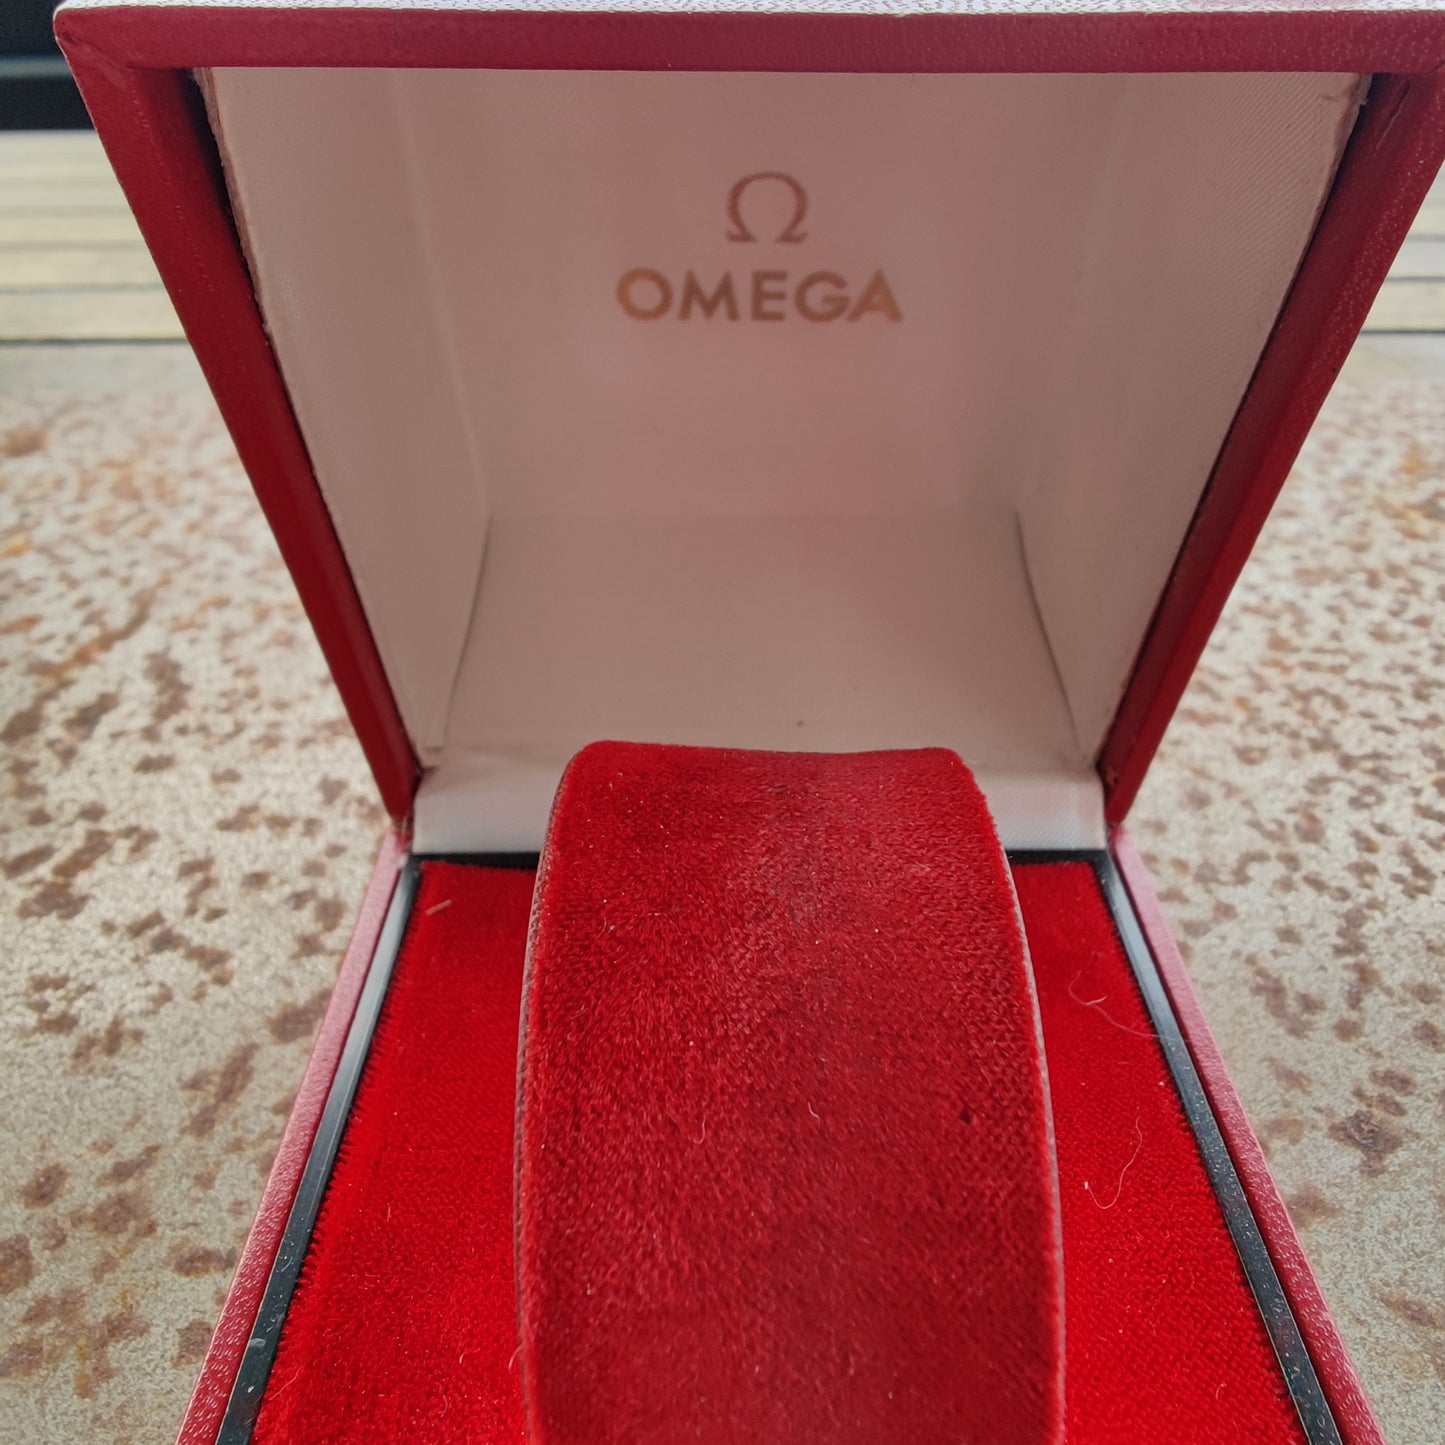 OMEGA CUBE BOX - VERY GOOD